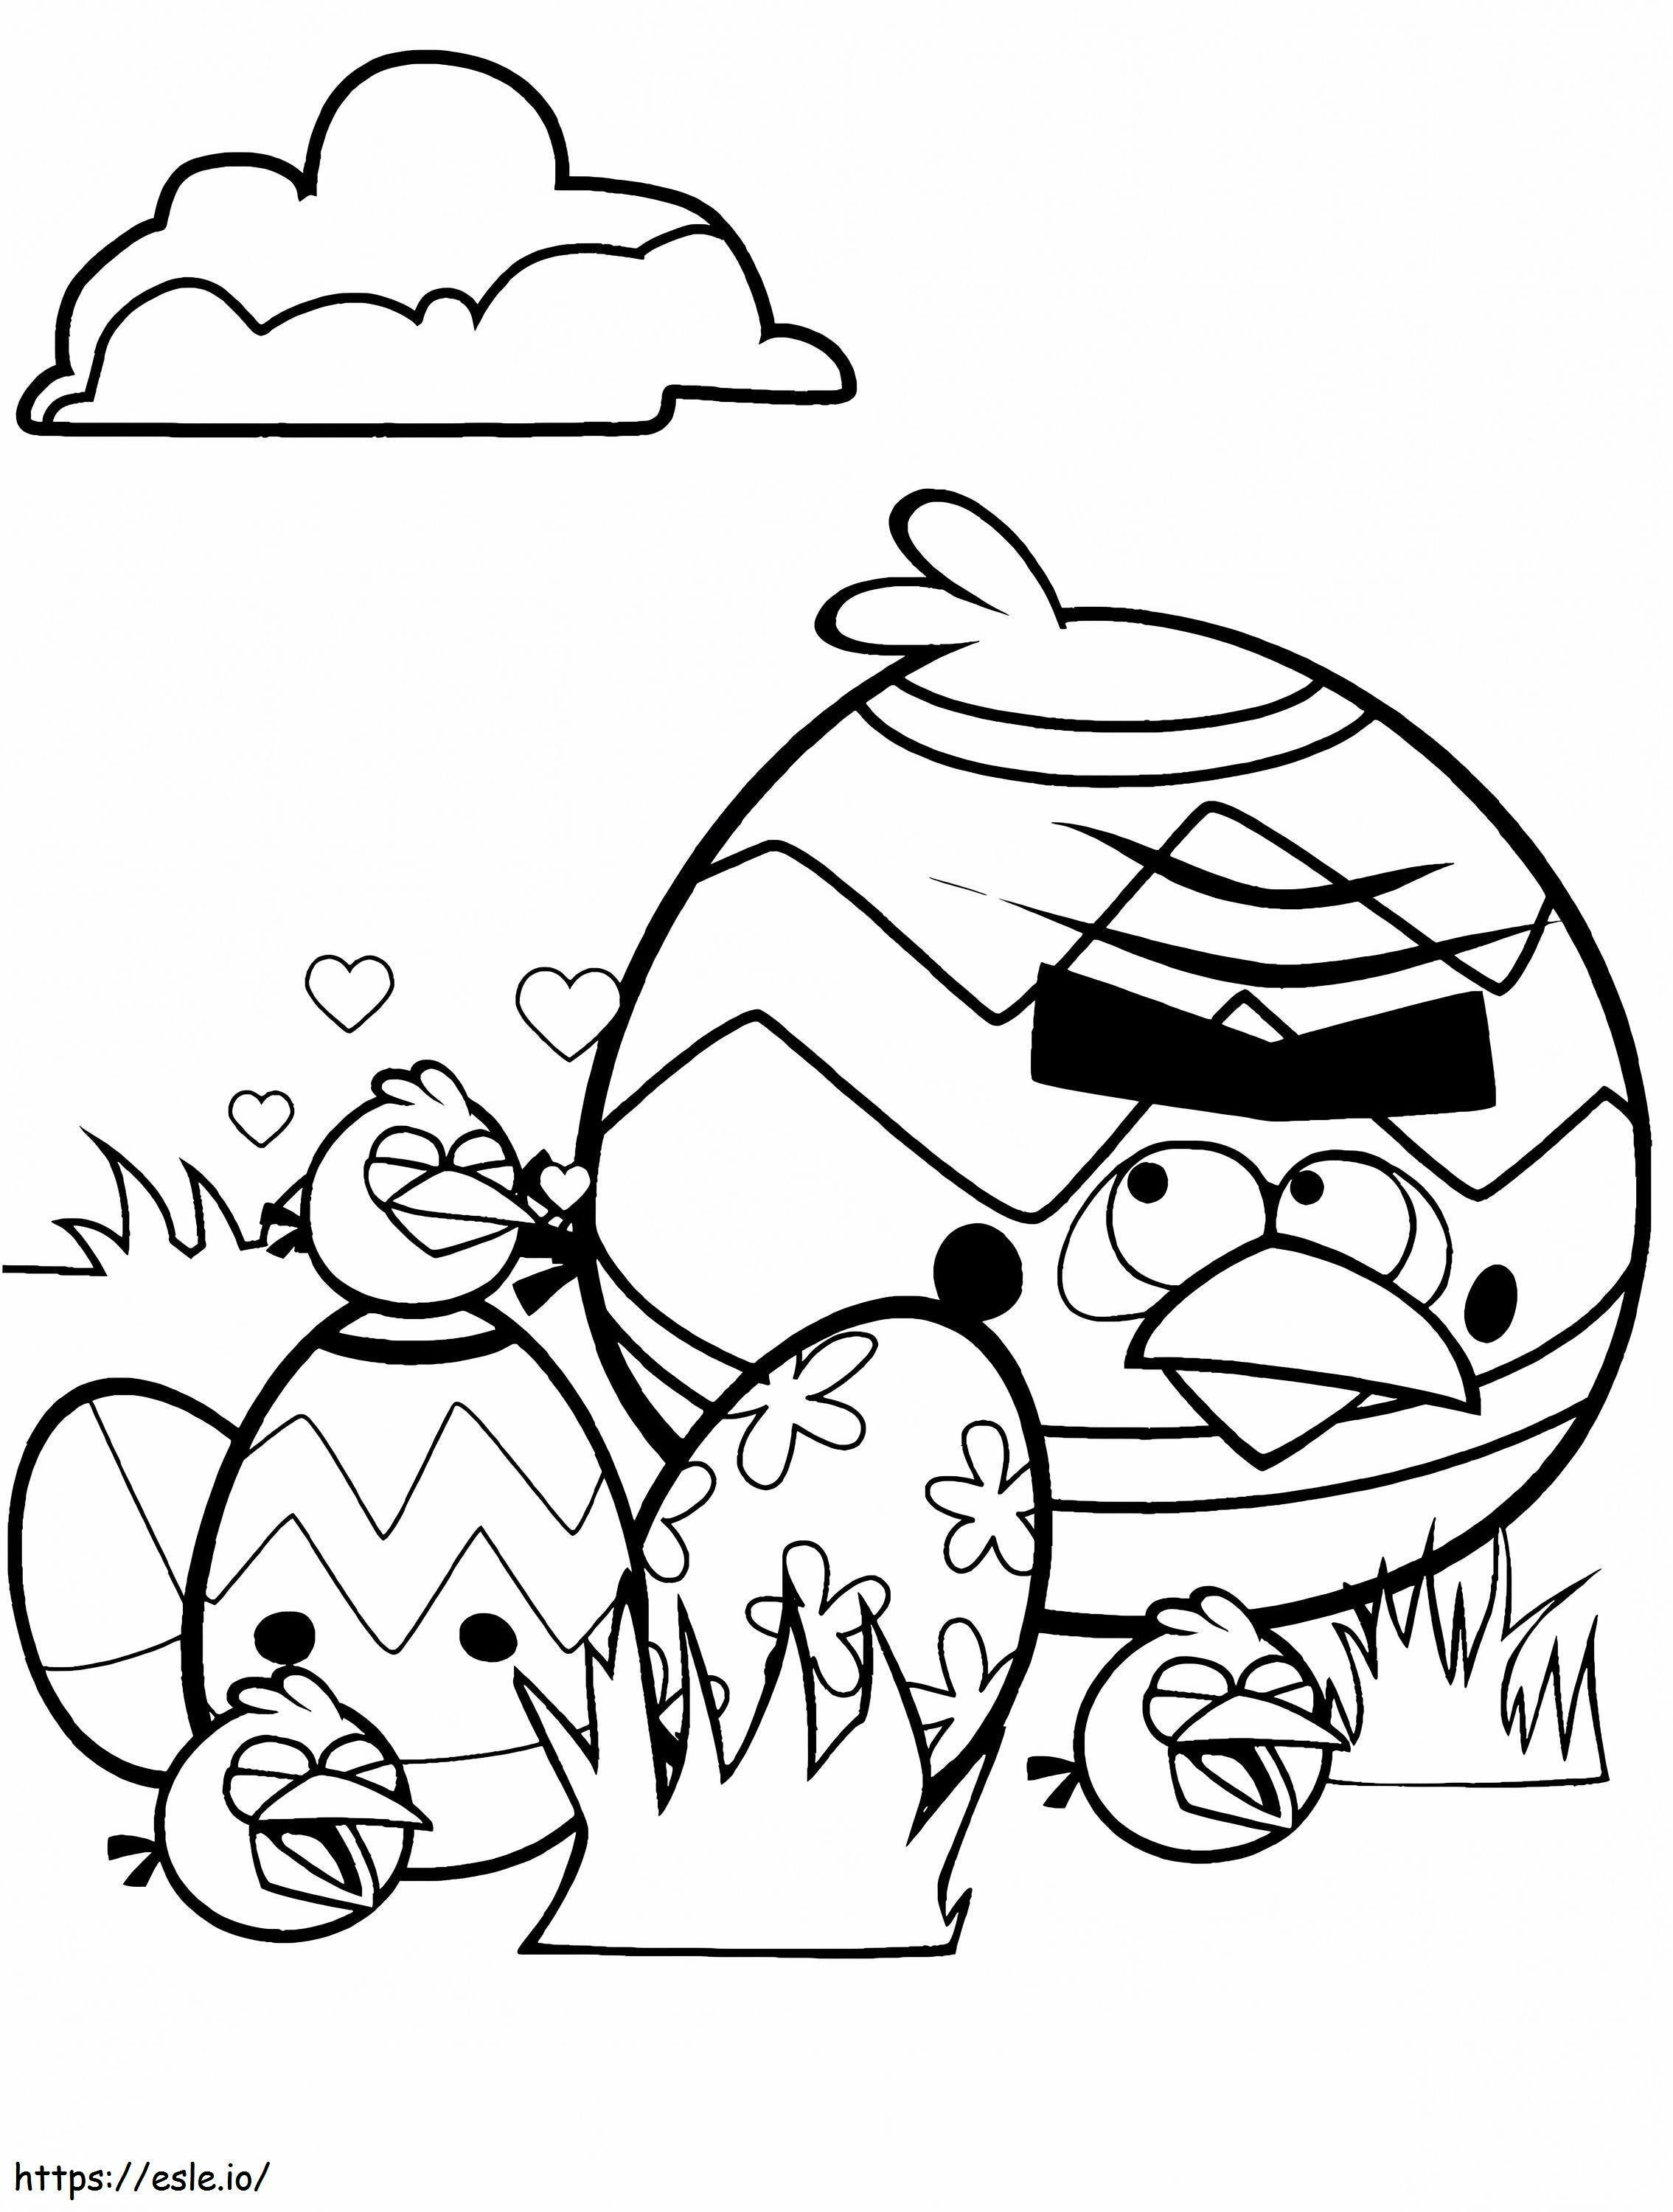 1551685172 Angry Birds 3 ausmalbilder